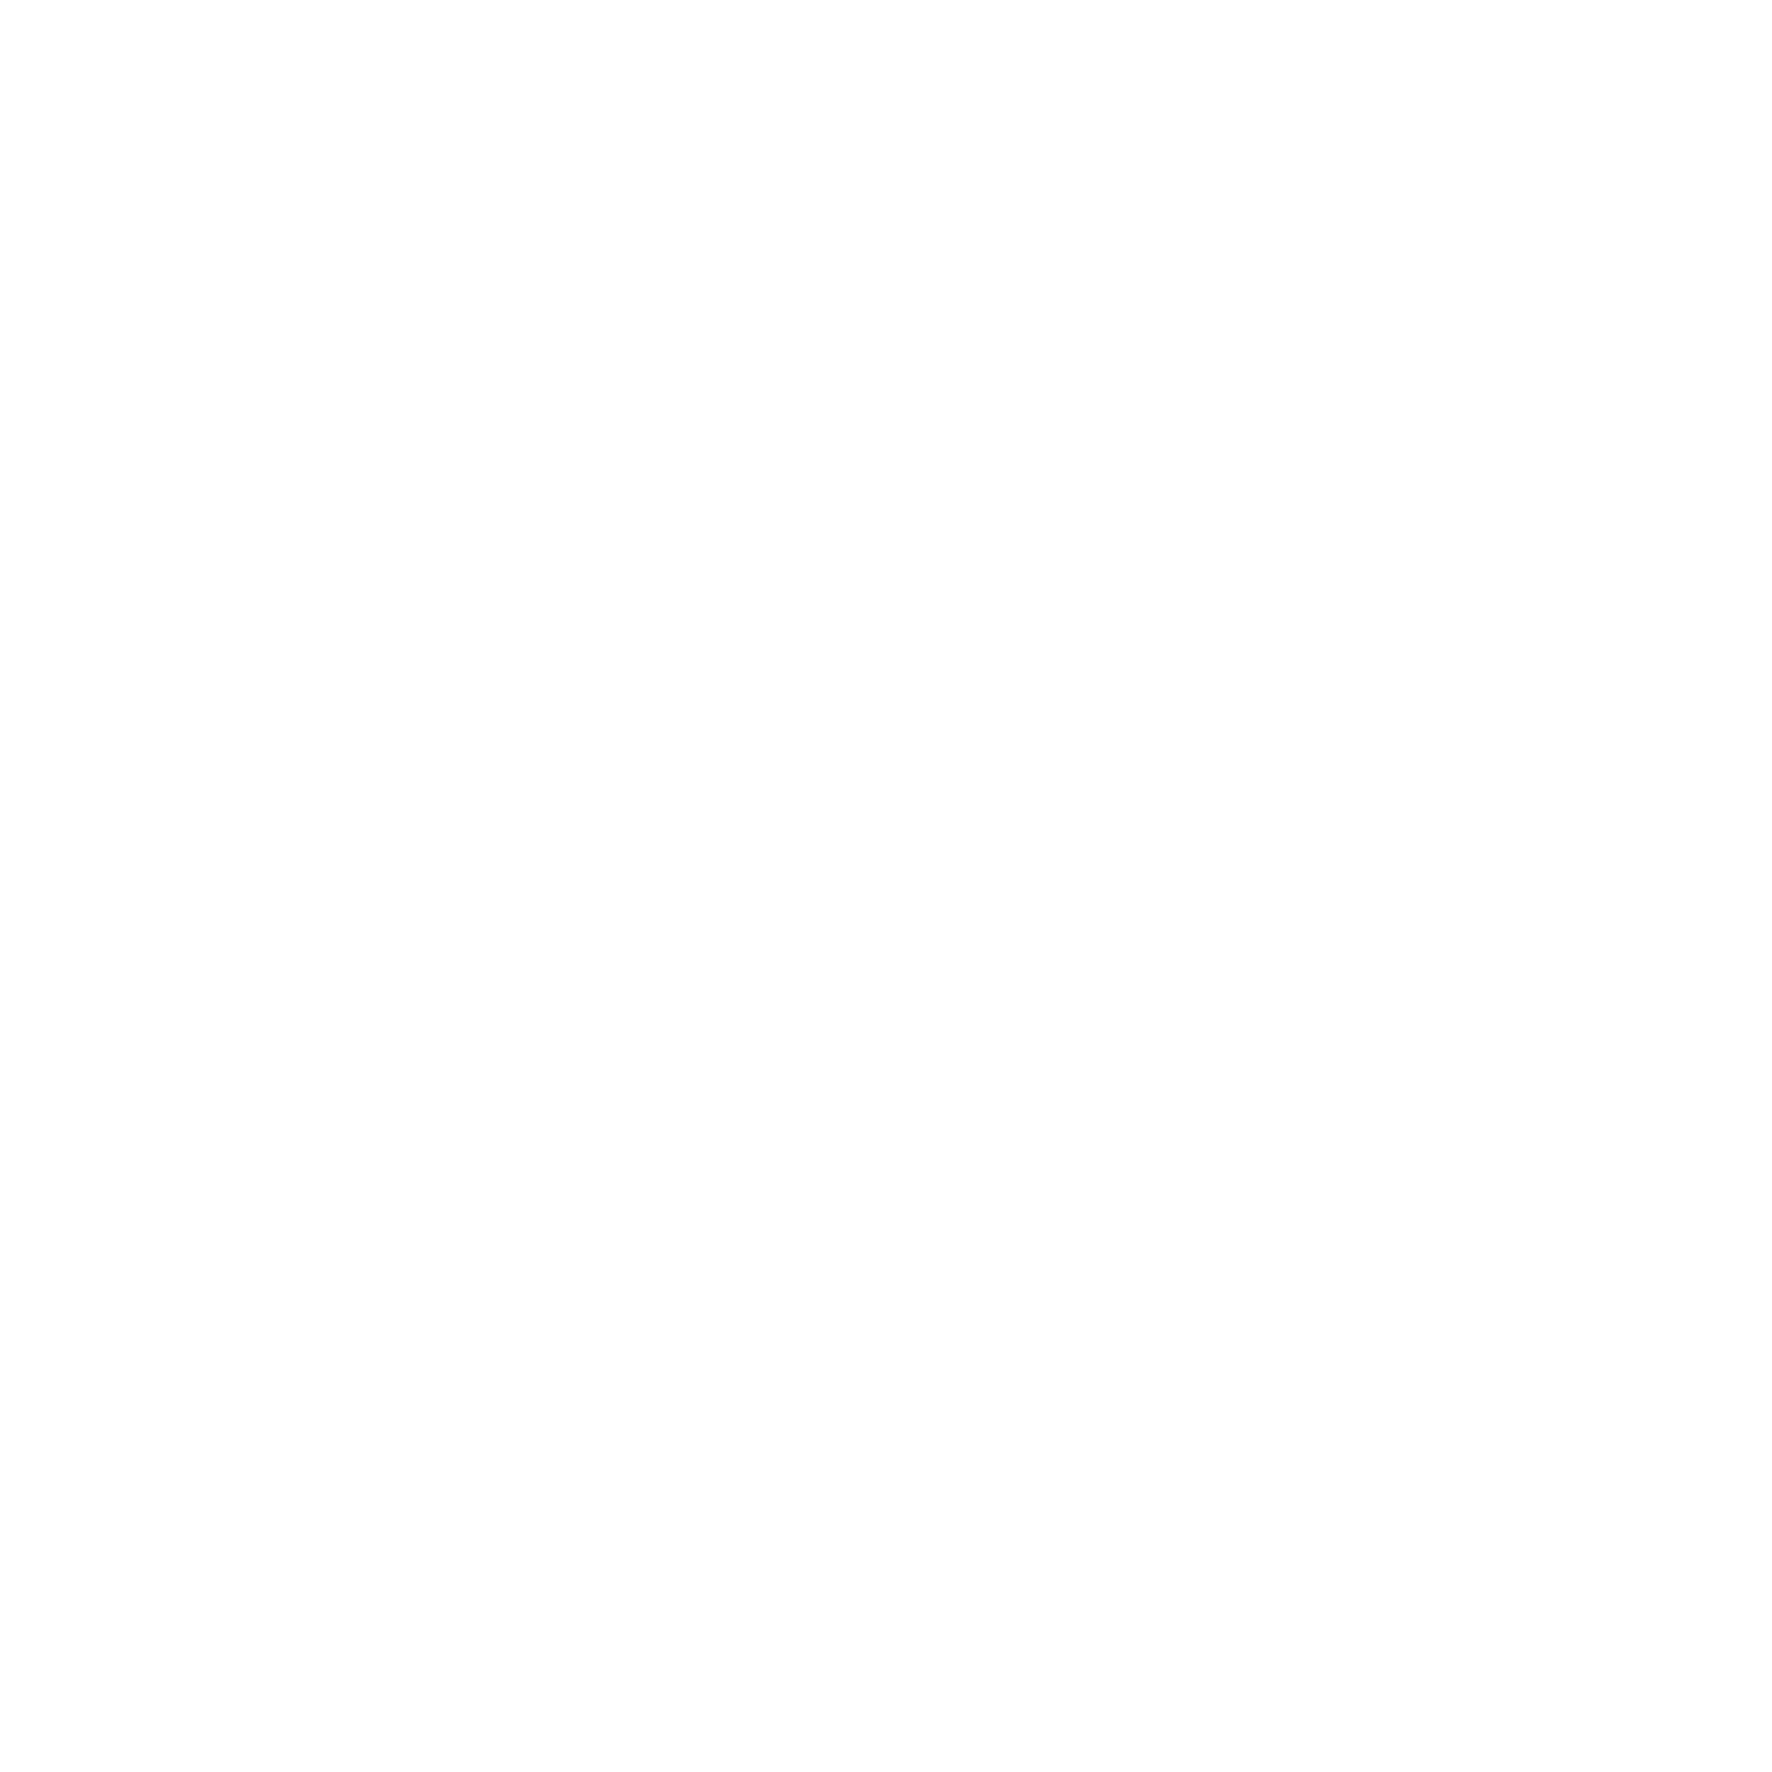 Mabea music management